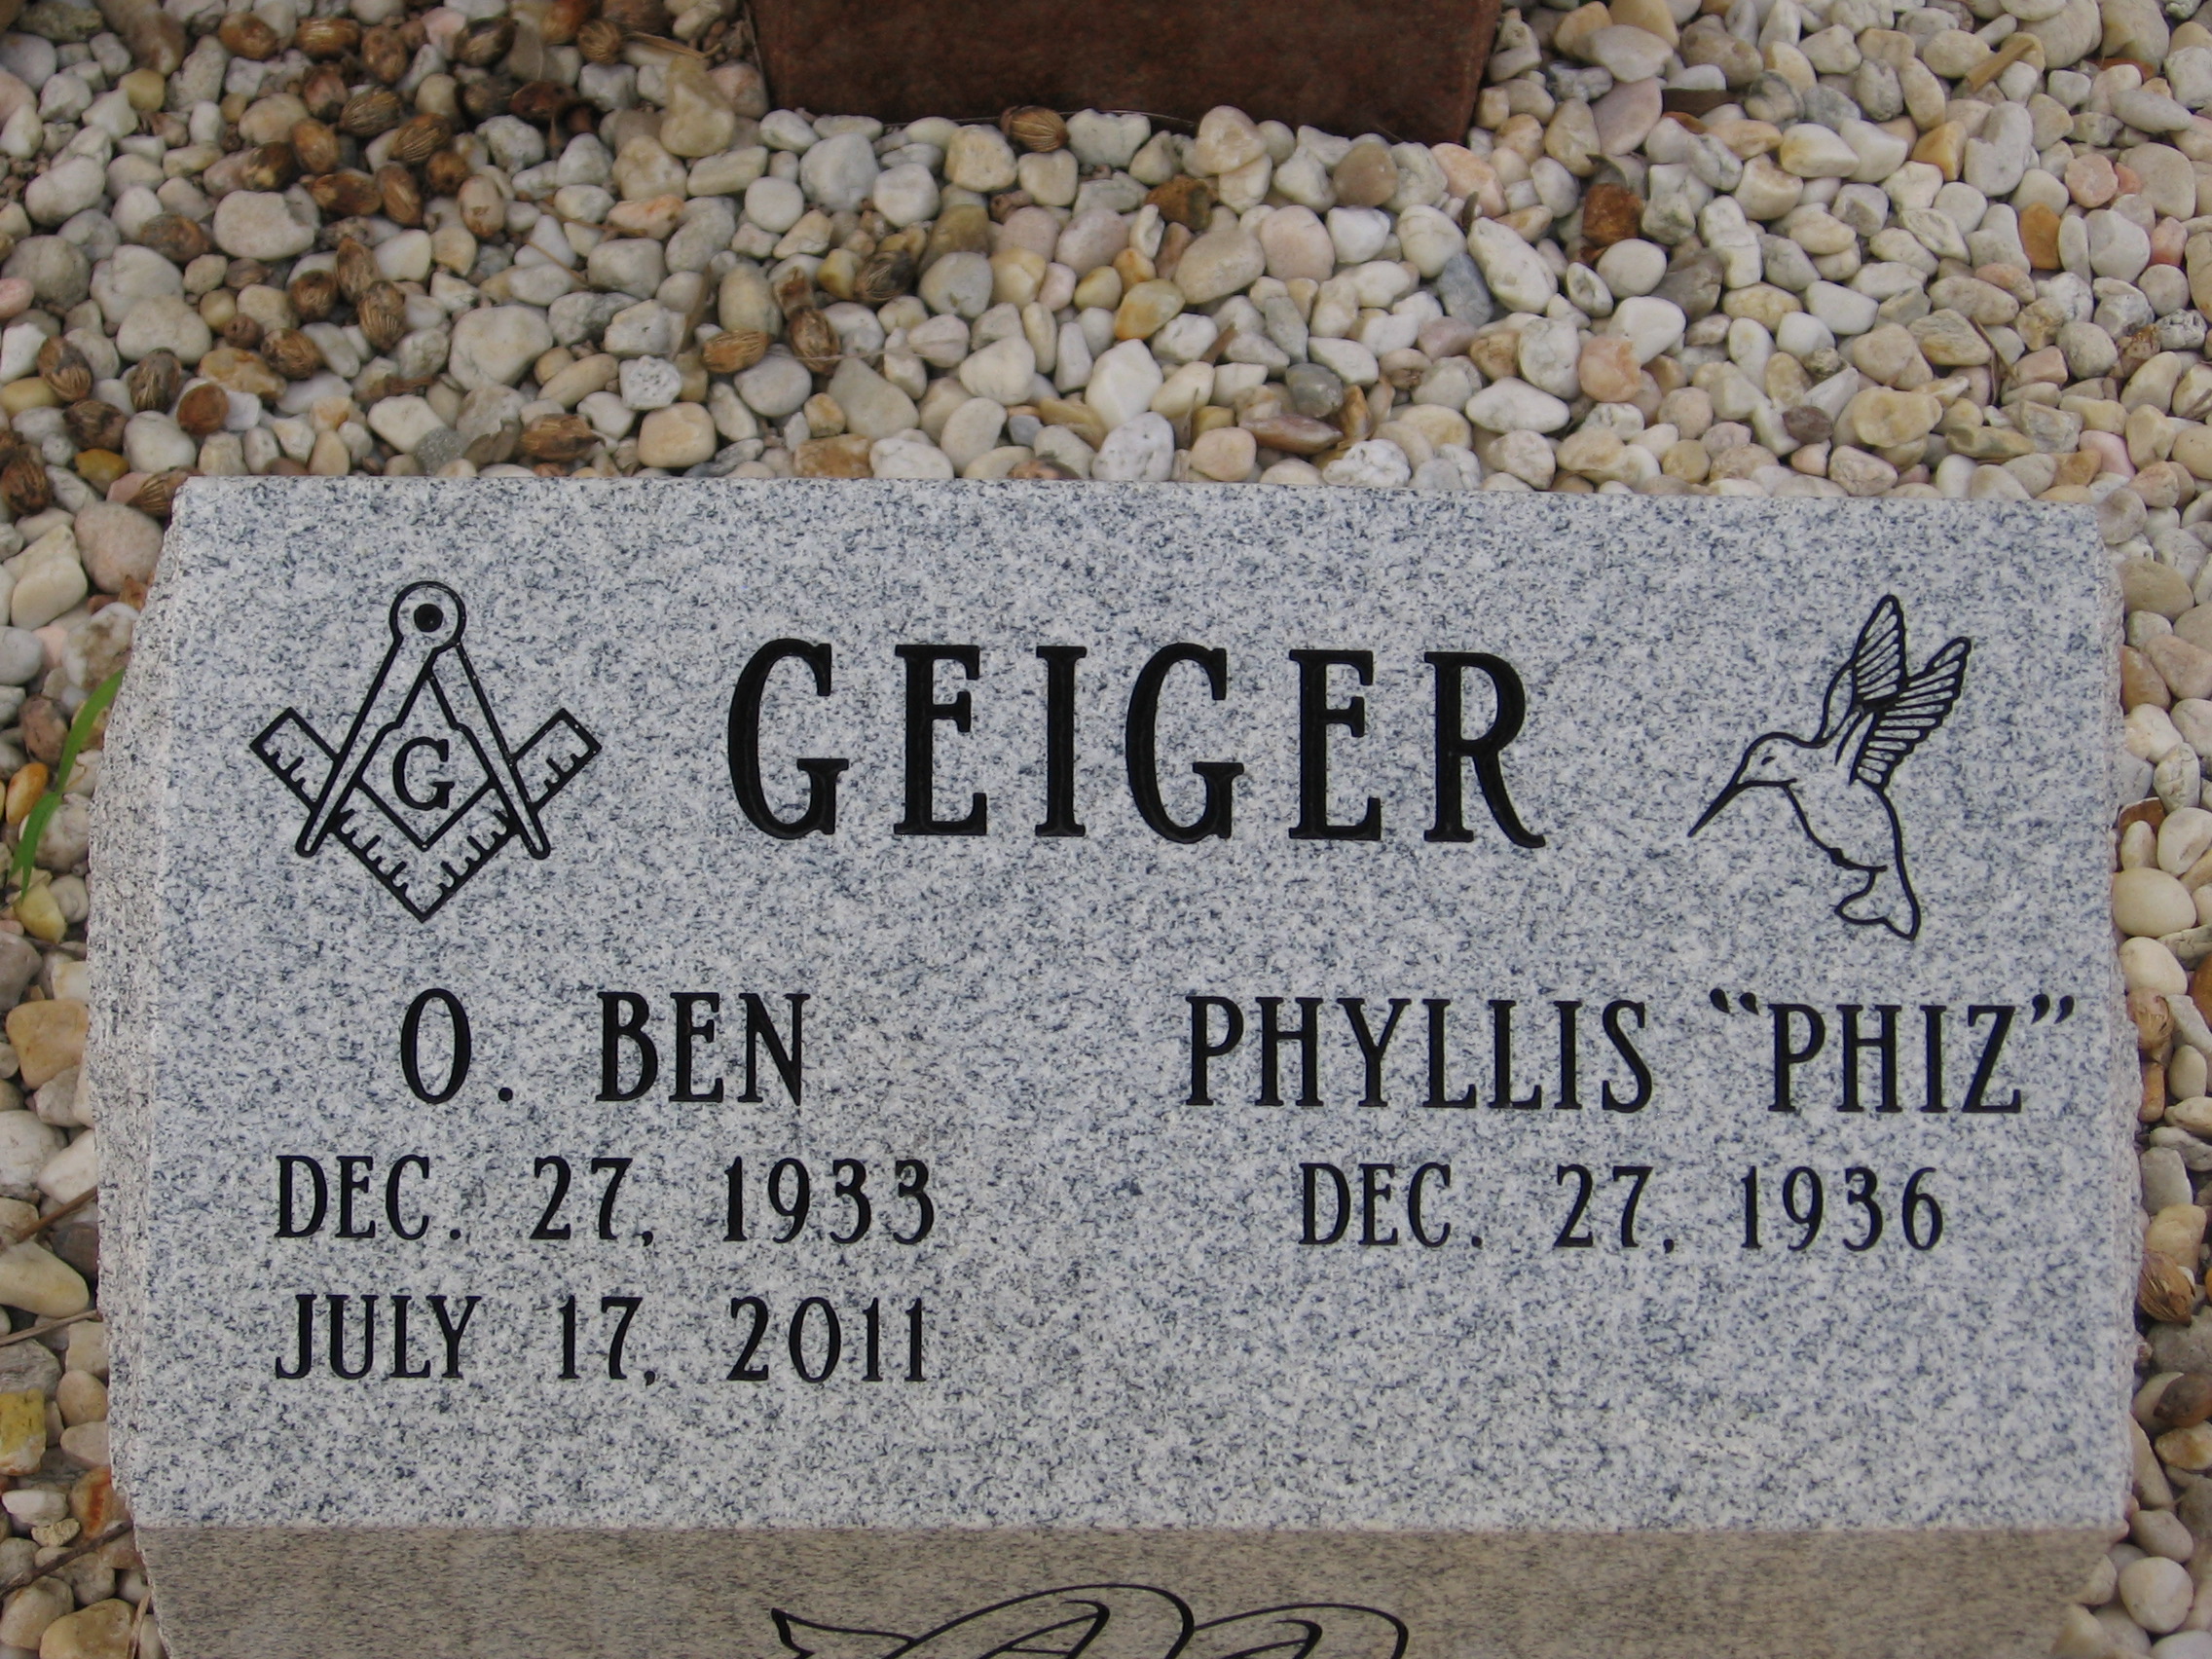 Phyllis "Phiz" Geiger